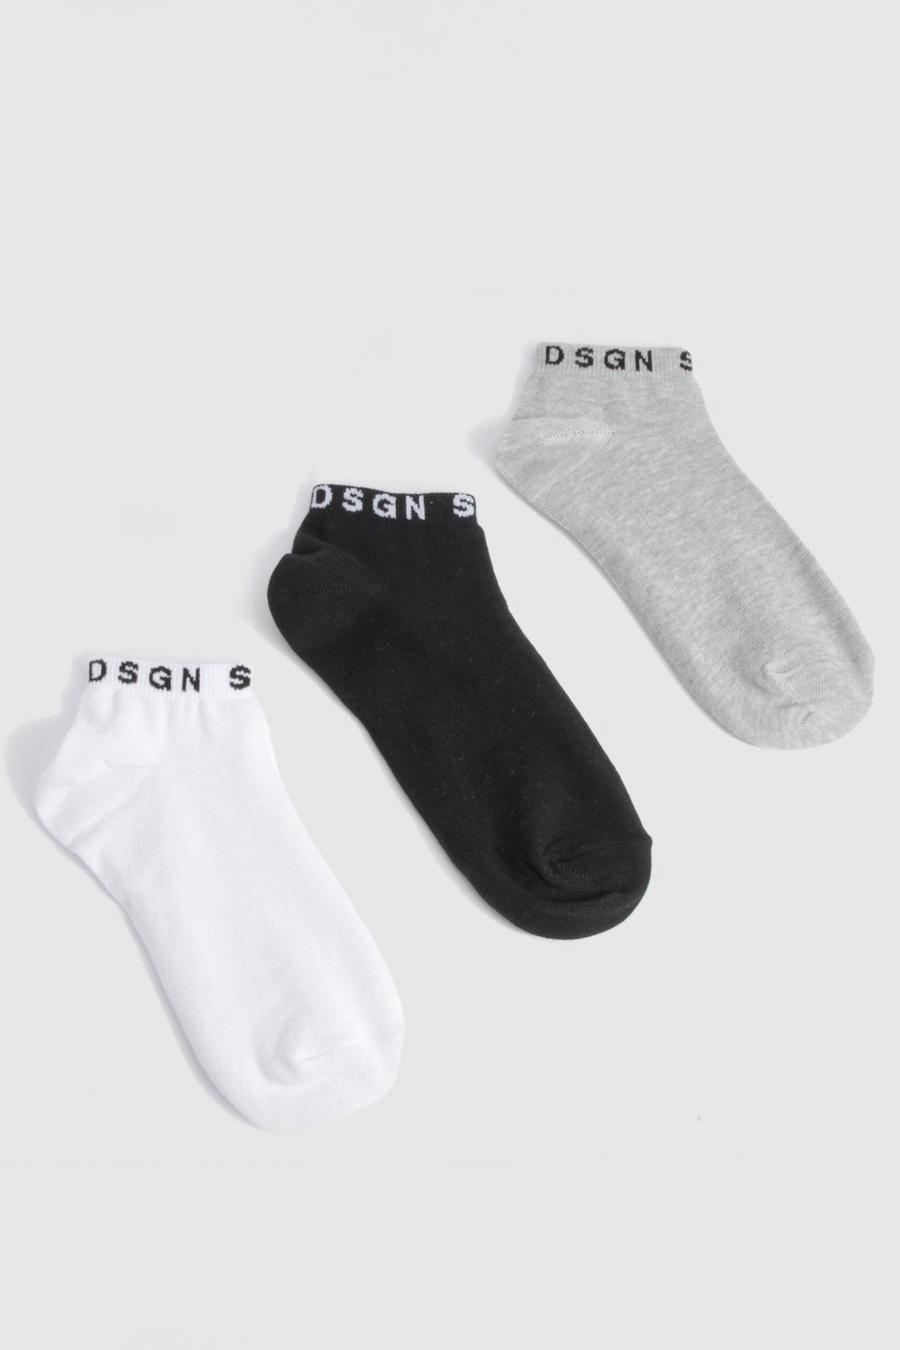 Dsgn Studio 3 Pack Multi Sneakers Socks